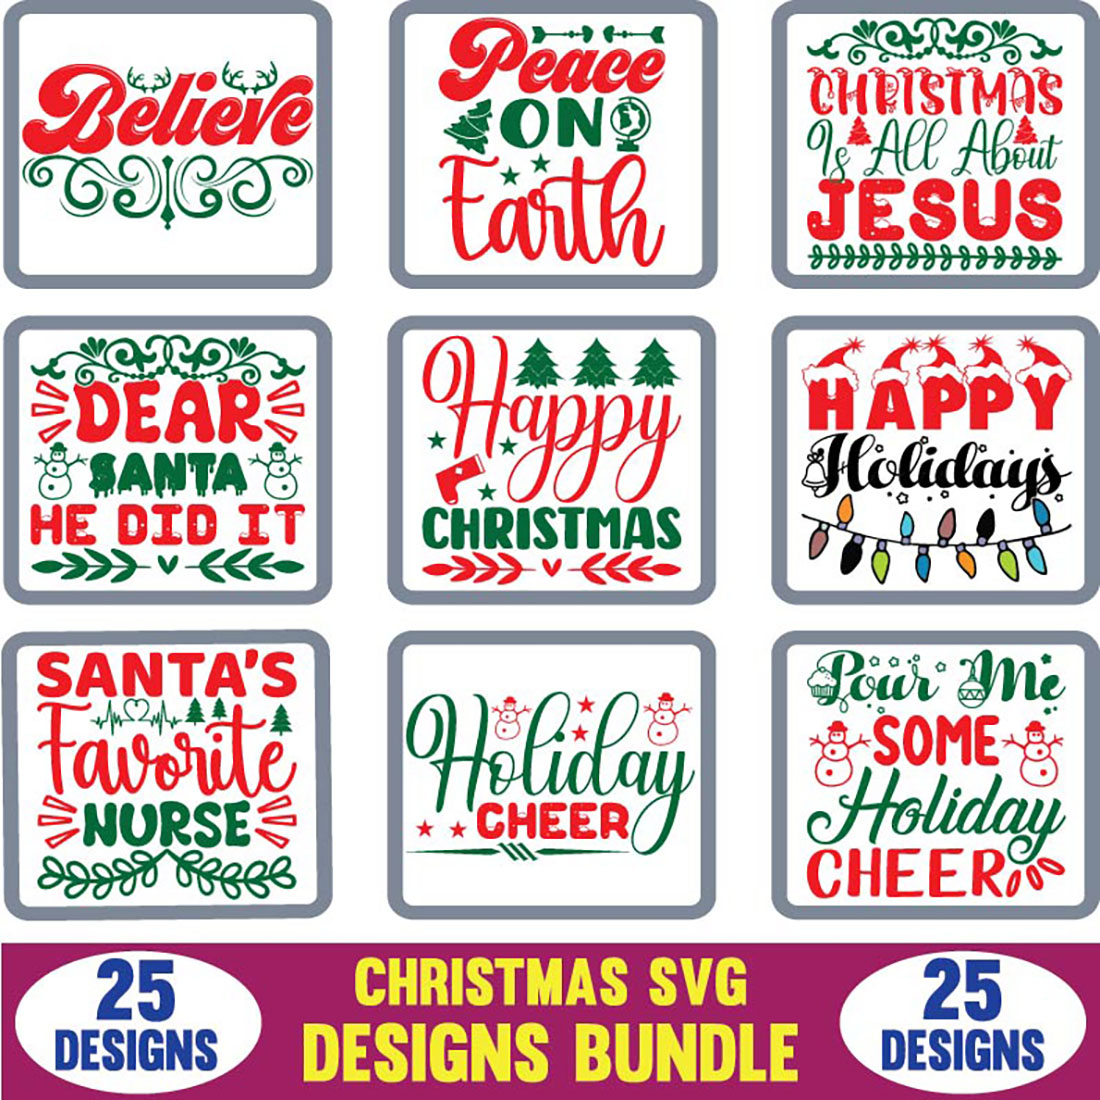 Christmas SVG Designs Bundle main cover.